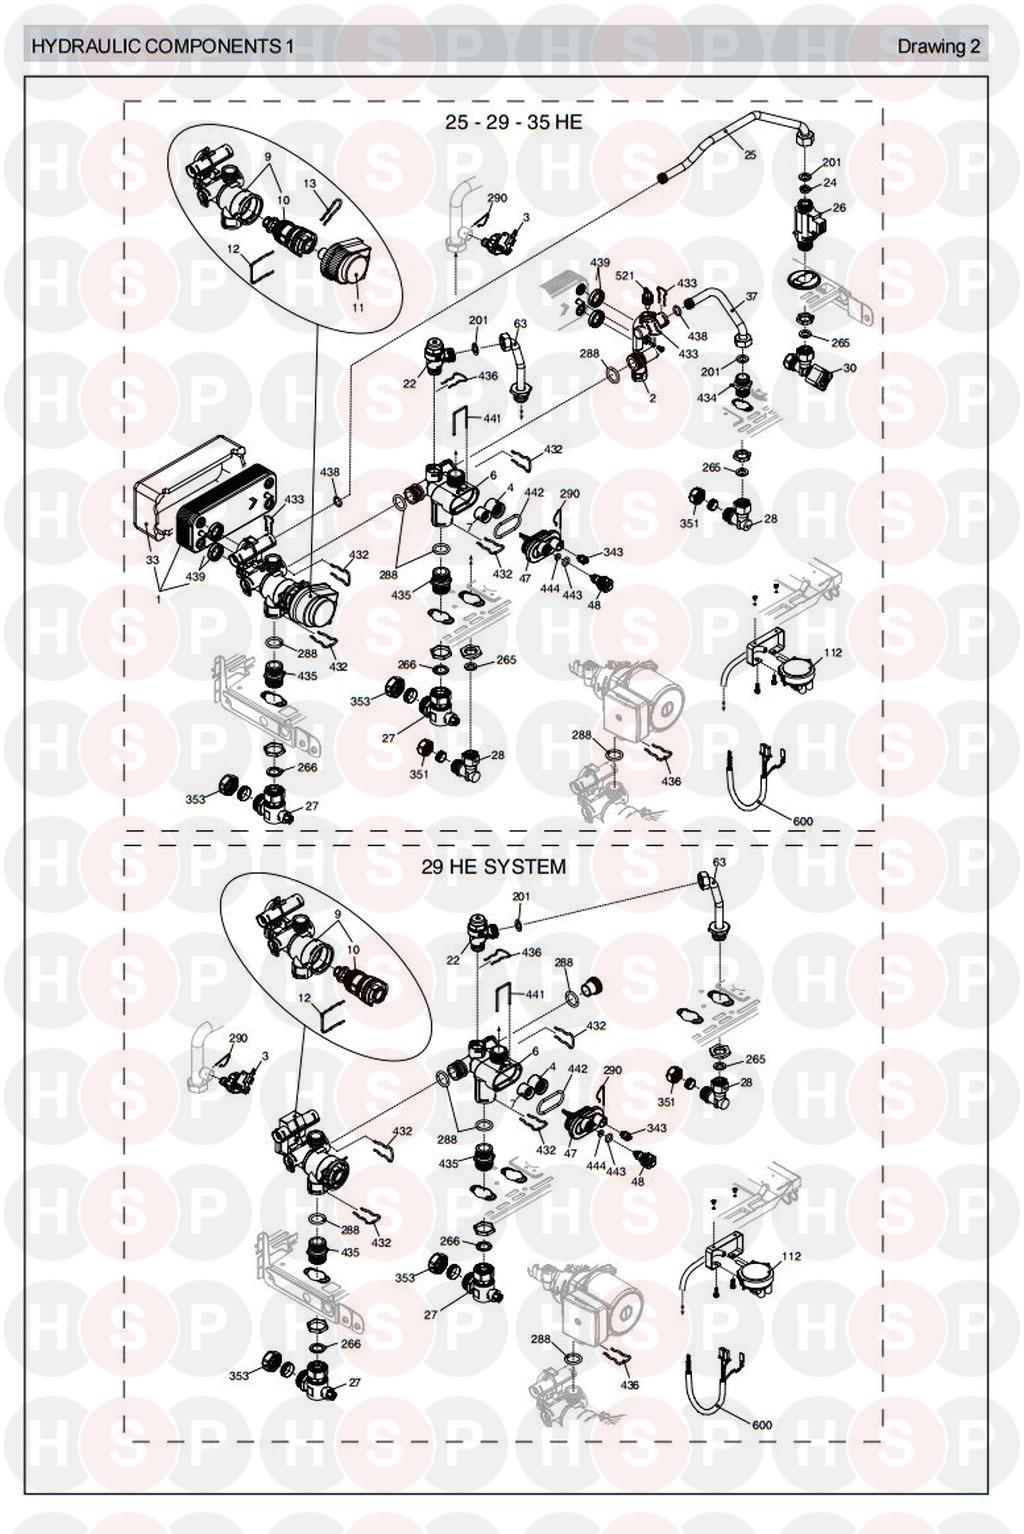 Hydraulics 1 diagram for Vokera Sabre 35 HE Rev 6 (11/2010)